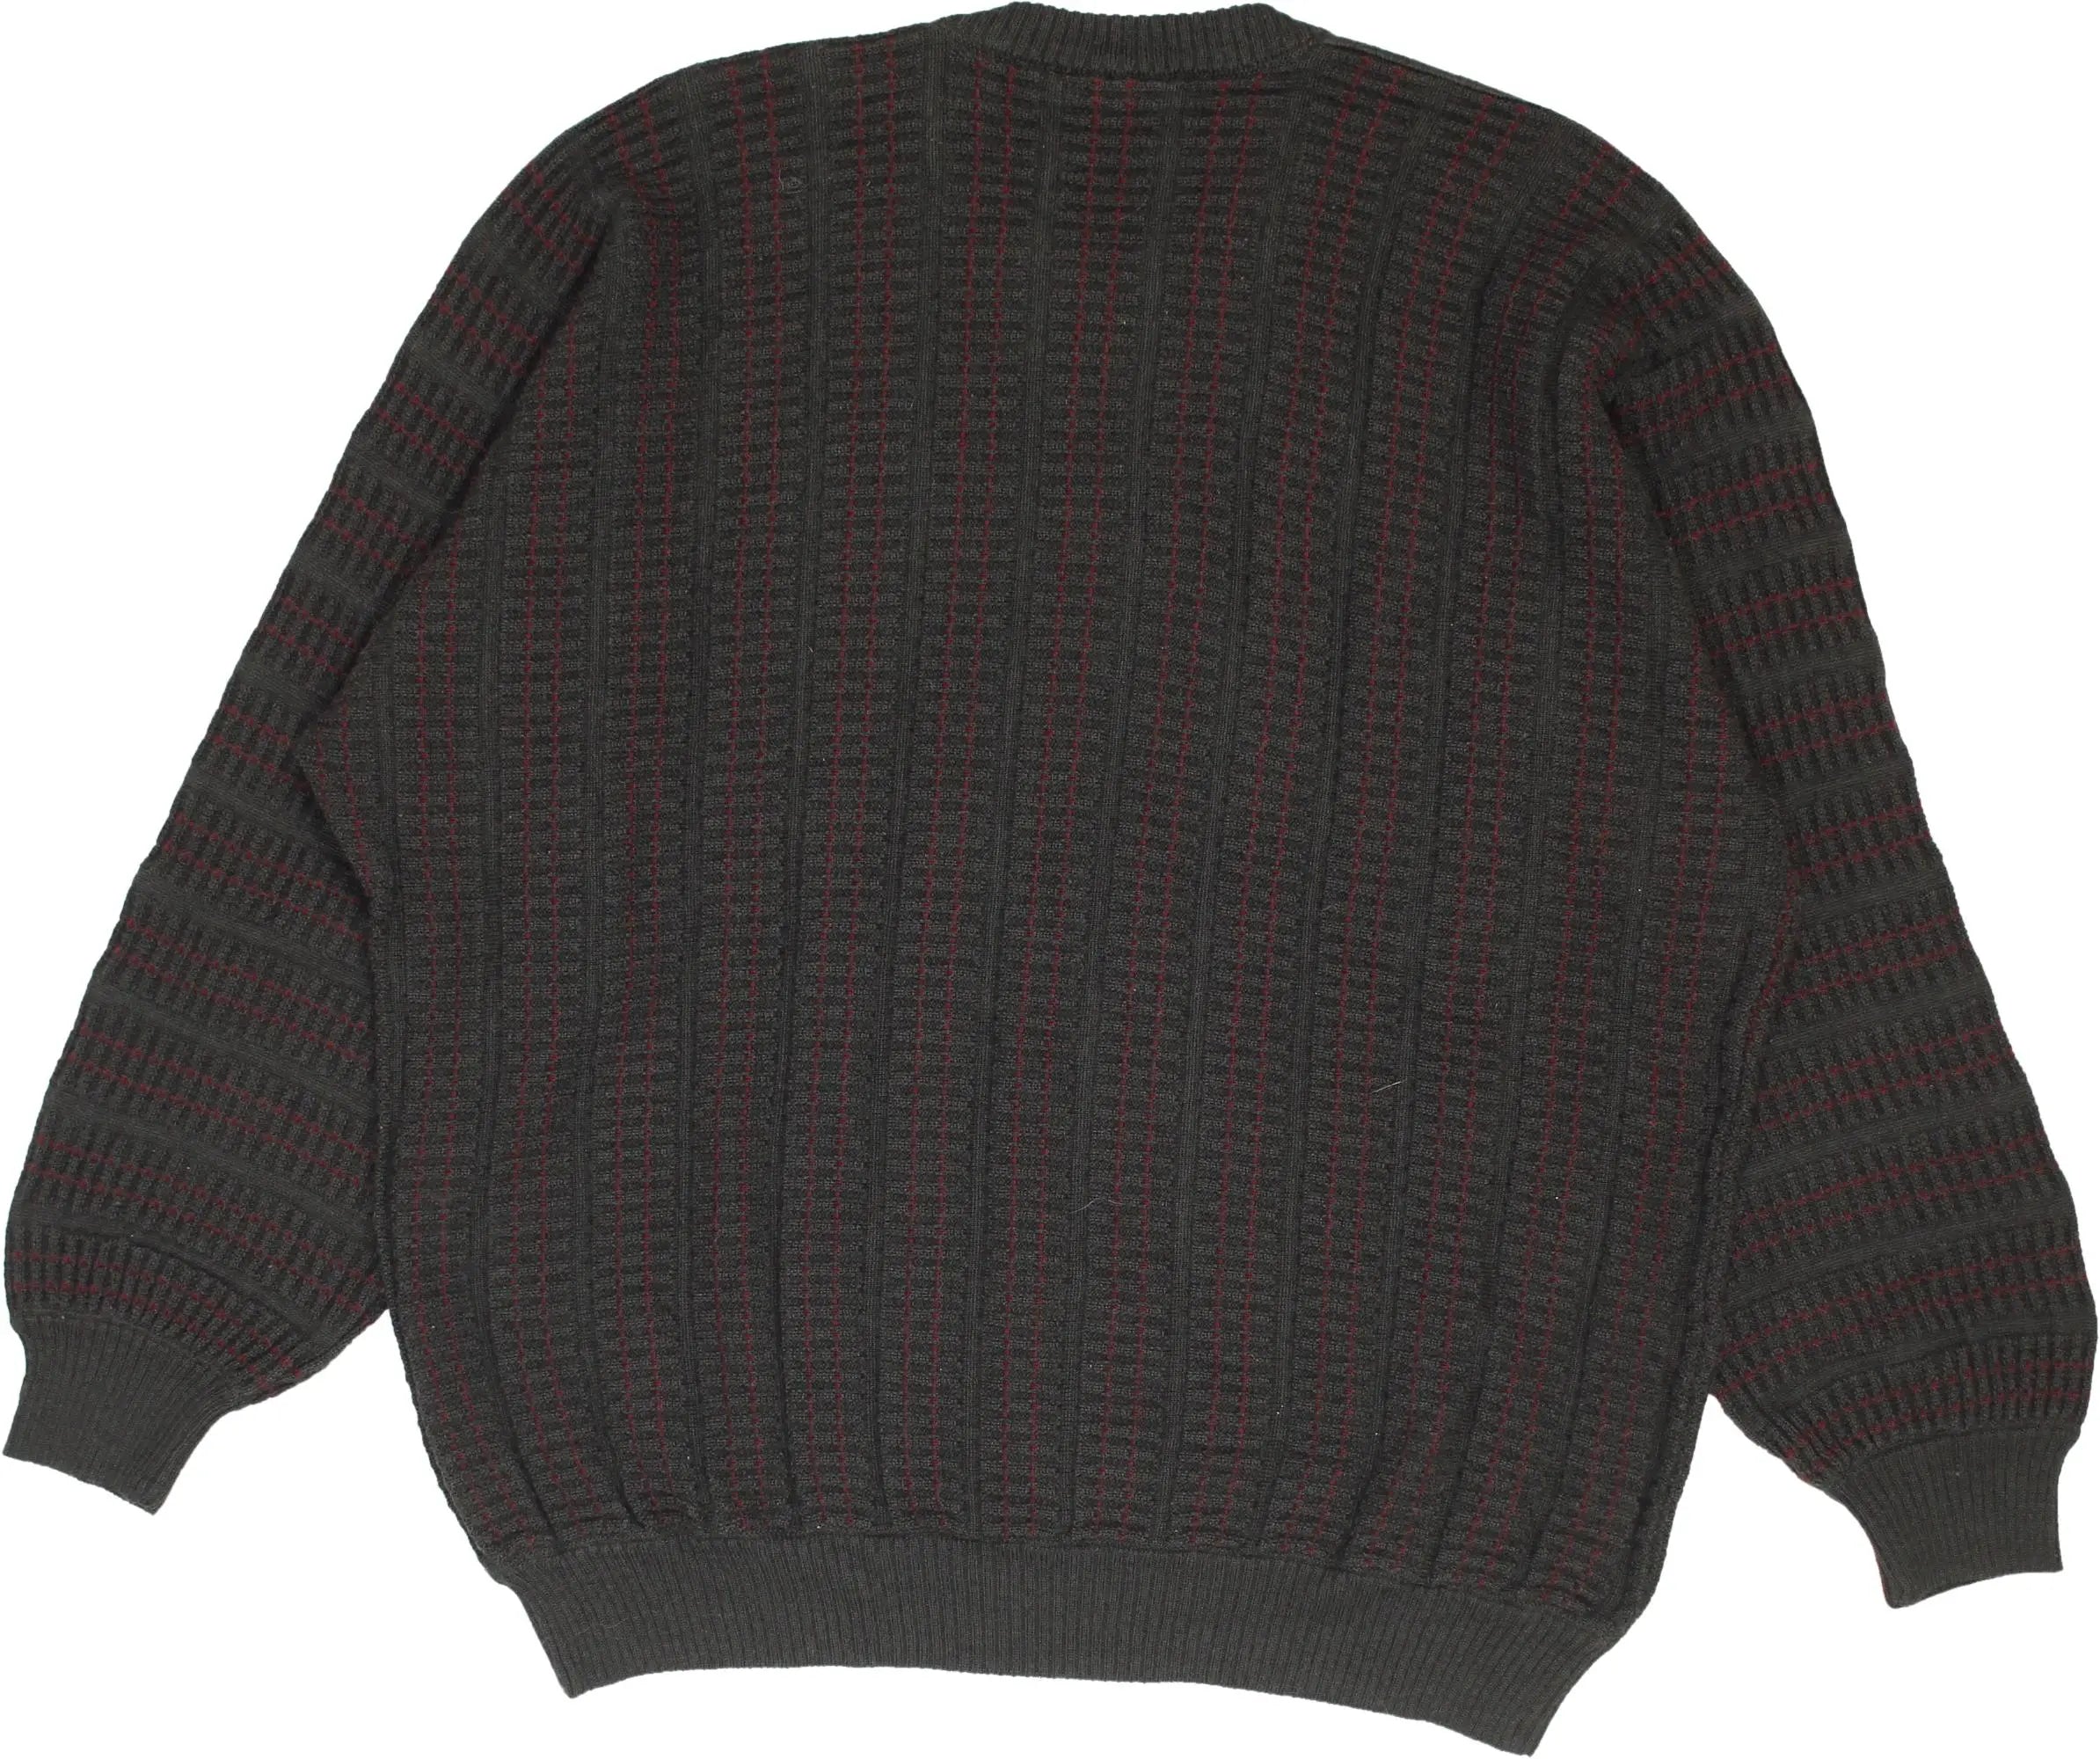 HP. Roessler - Patterned jumper- ThriftTale.com - Vintage and second handclothing